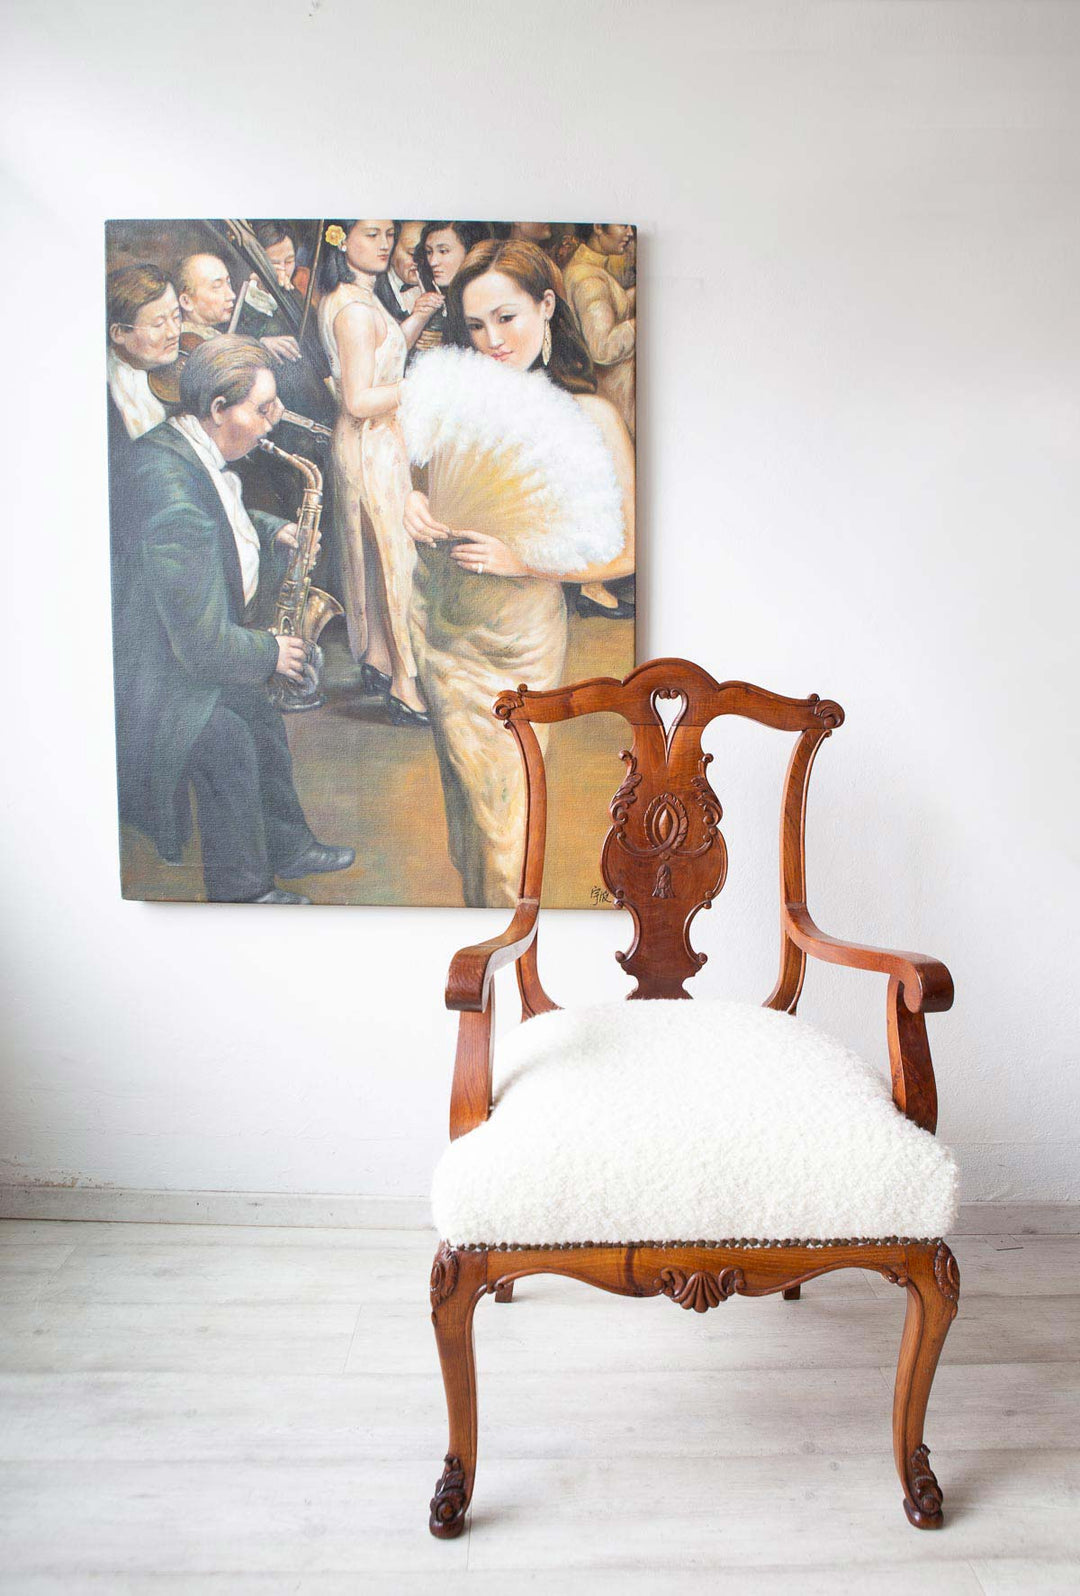 Gran butaca castaño tallado tapizada rizo blanco (105 cm)